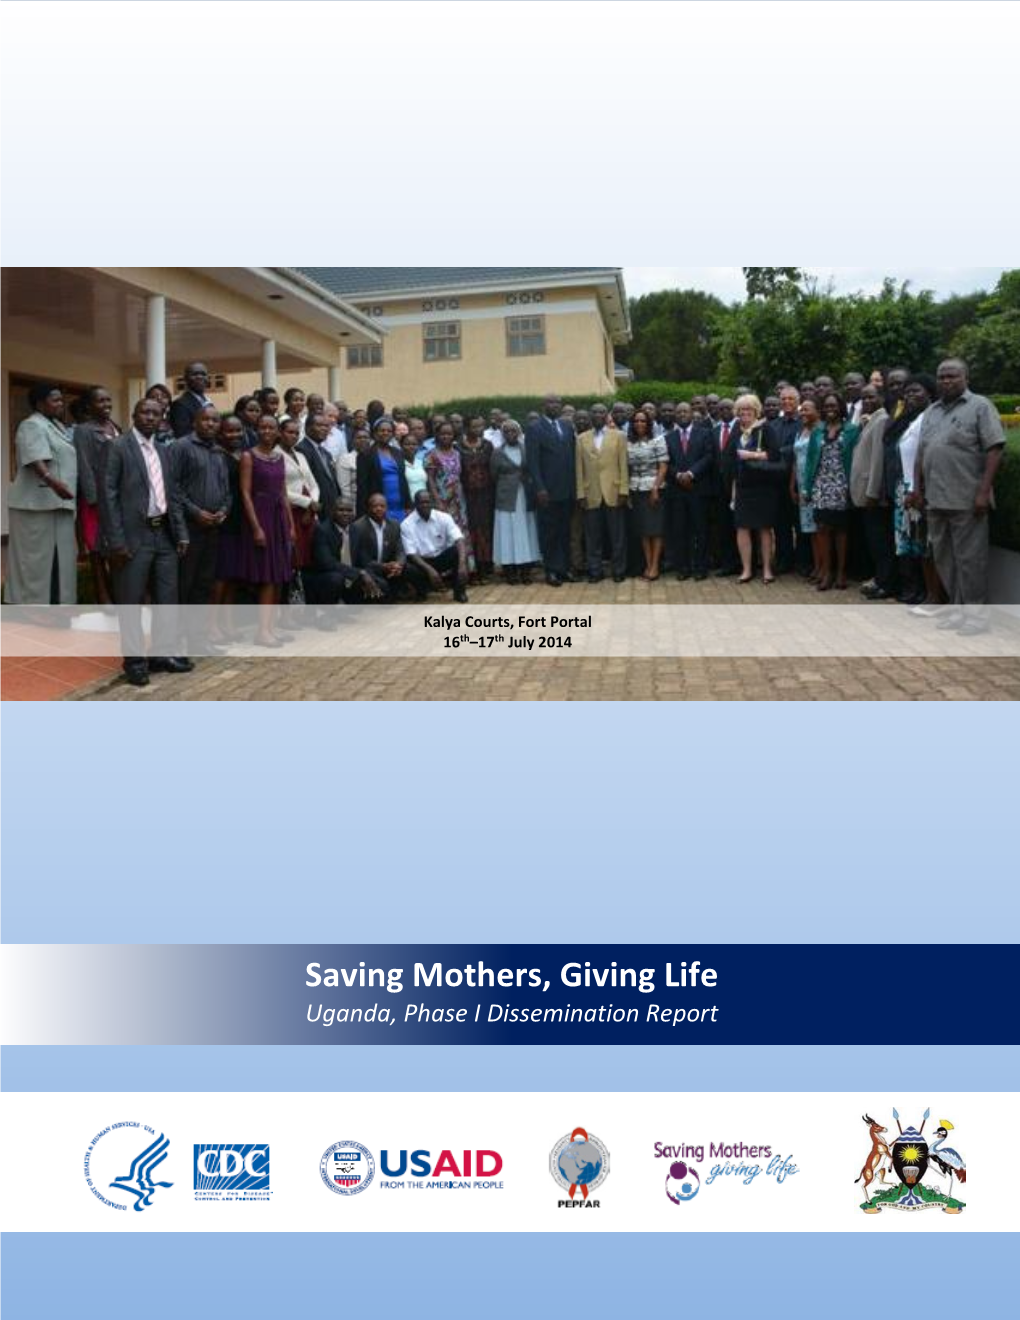 Saving Mothers, Giving Life. Uganda, Phase I Dissemination Report, July